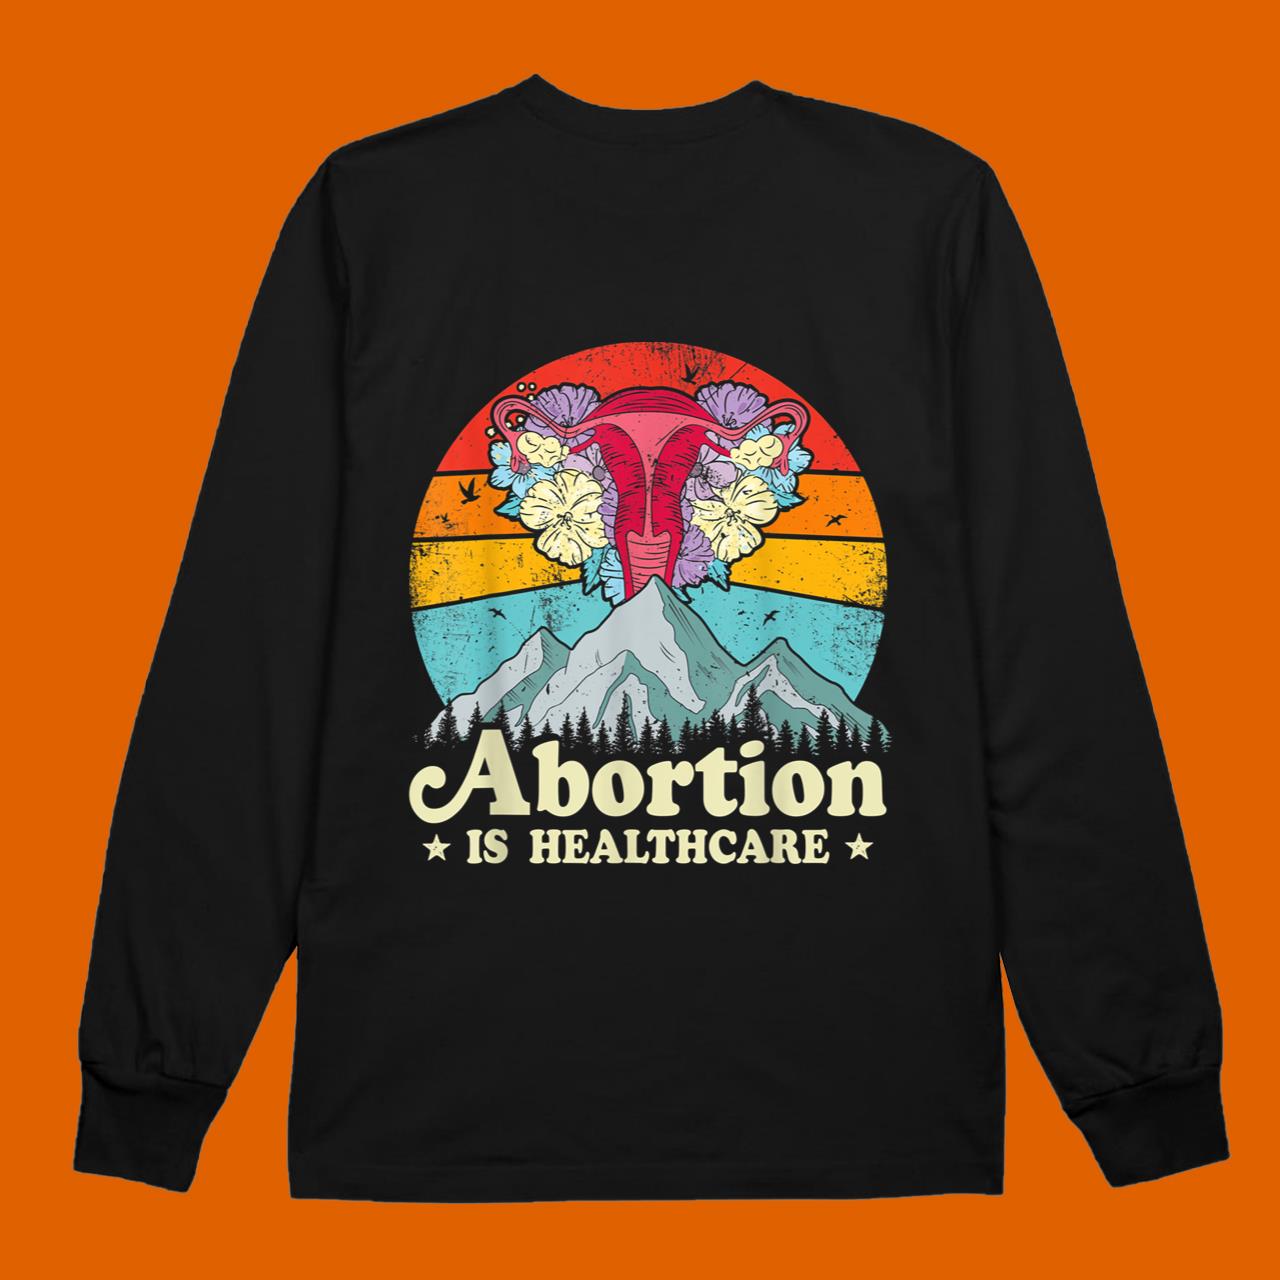 Abortion Is Healthcare Feminist Feminism Women's Pro Choice T-Shirt